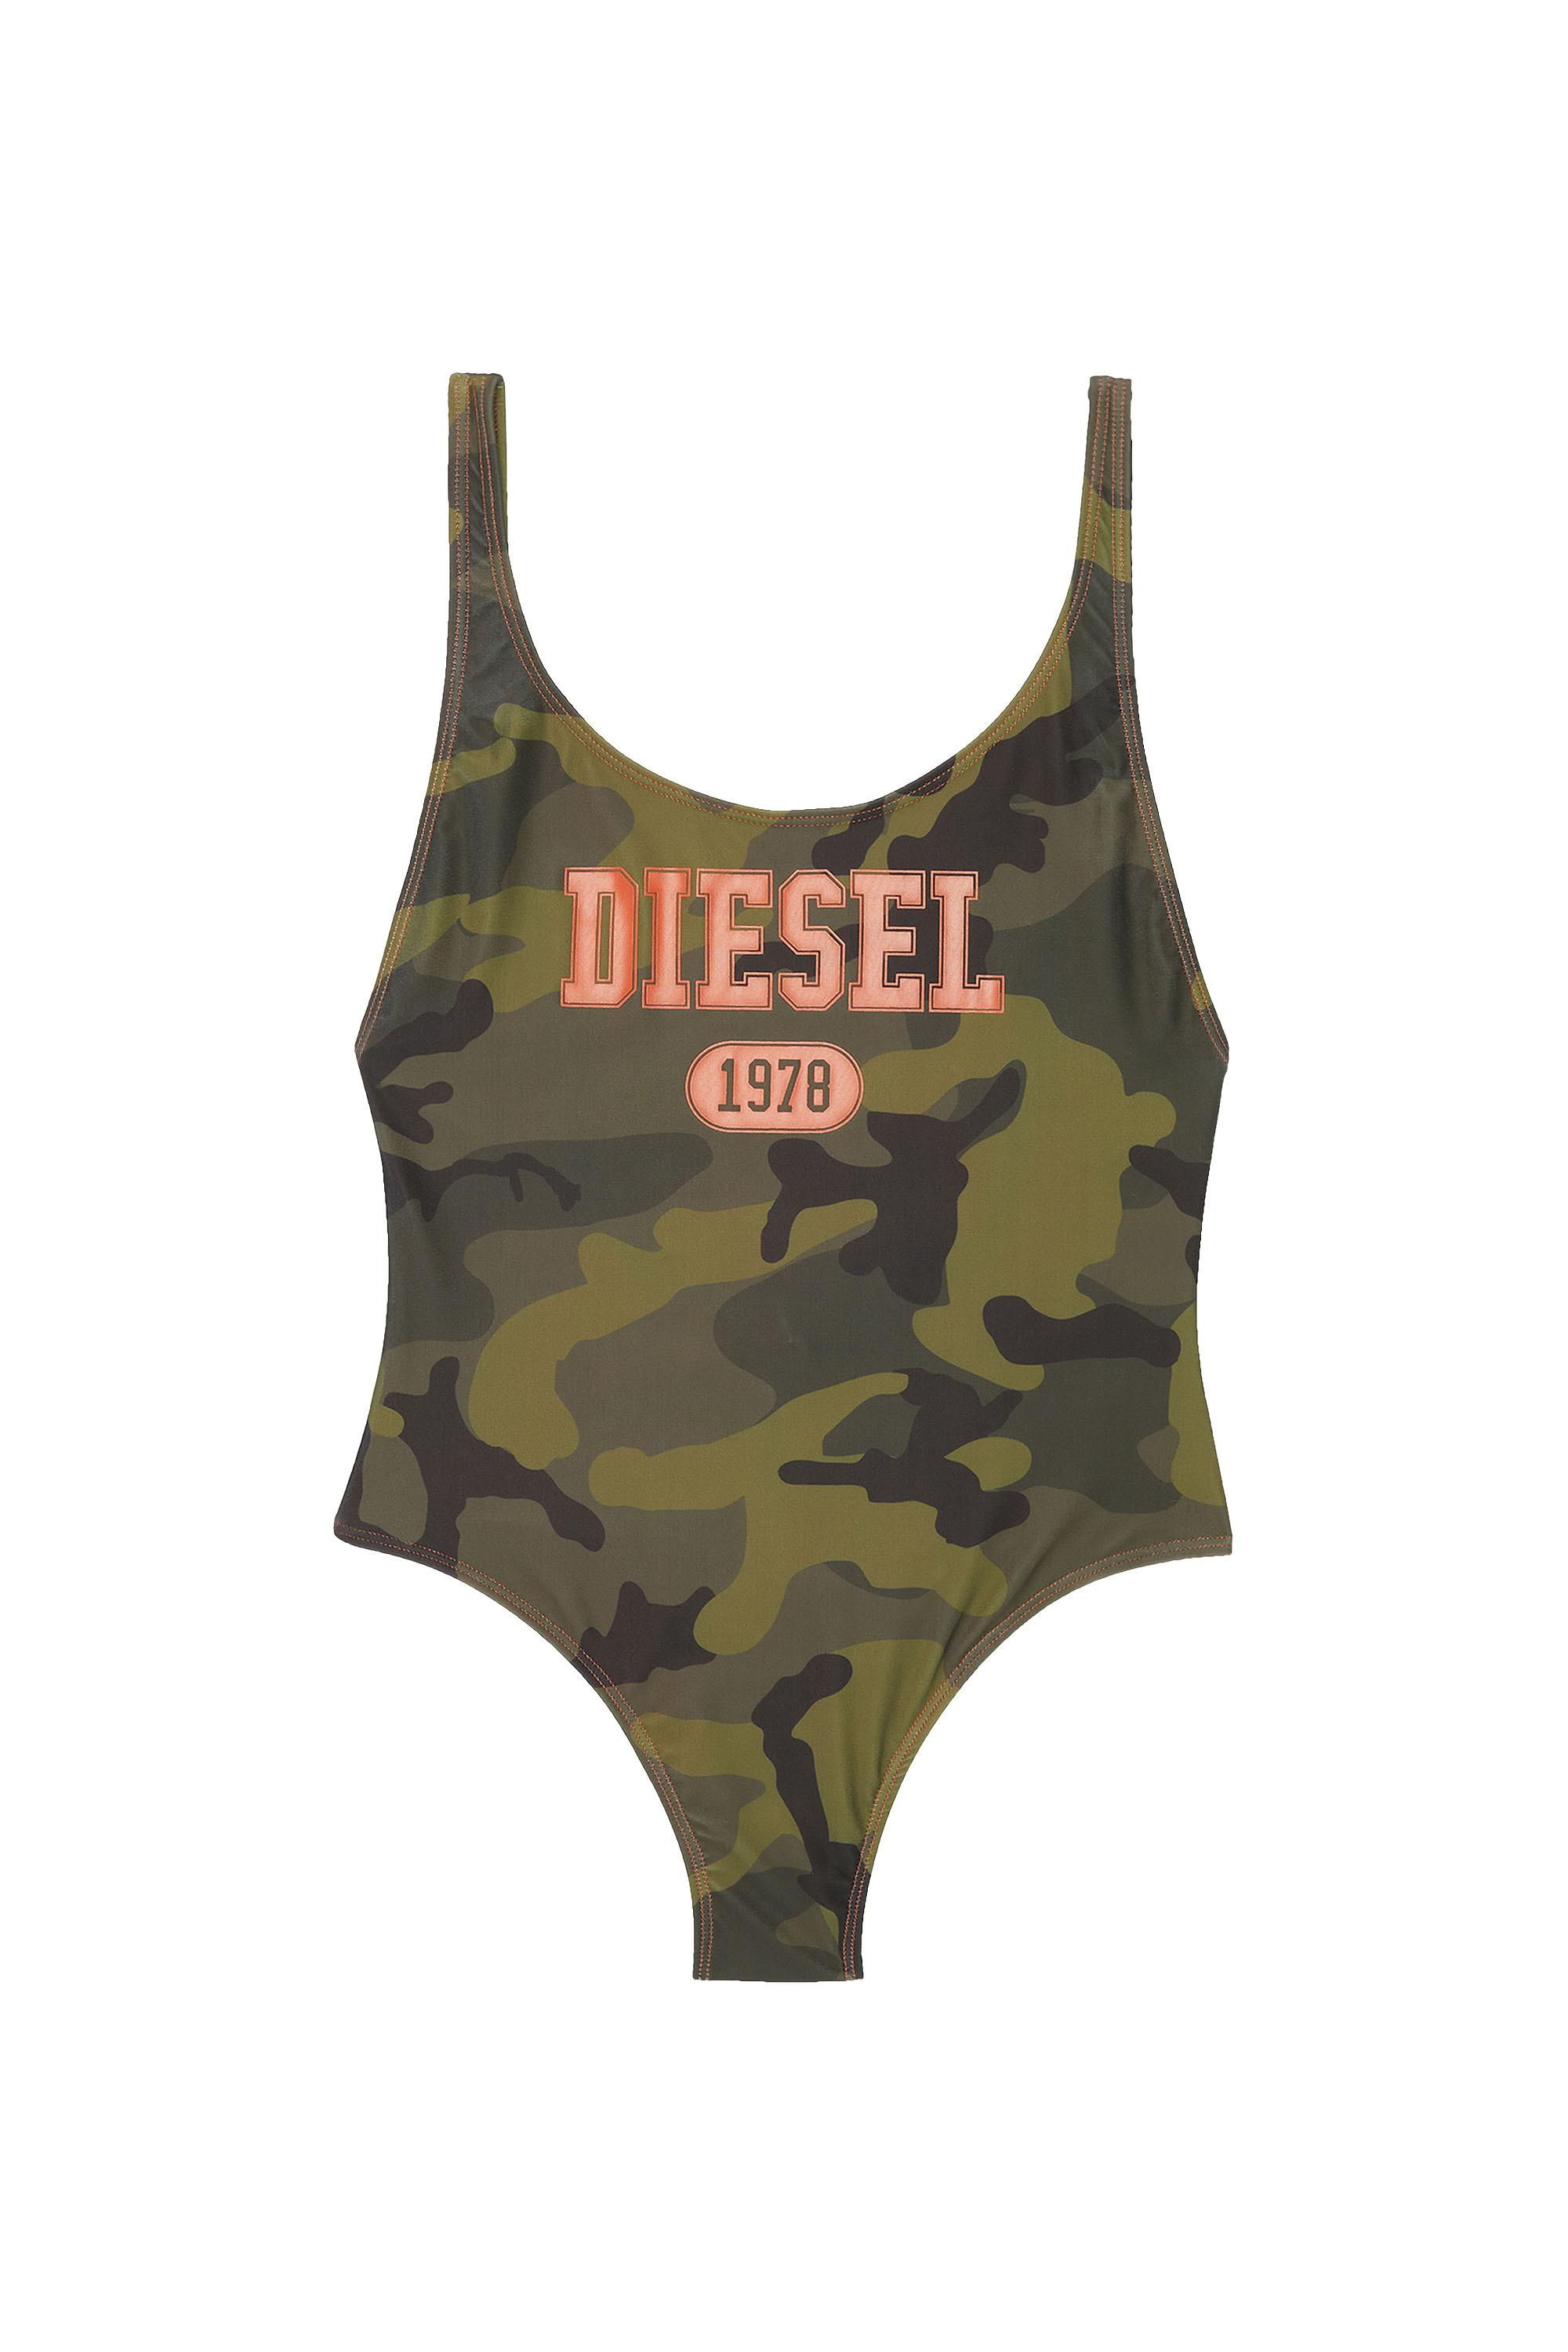 Diesel - BFSW-SLIA, Military Green - Image 2